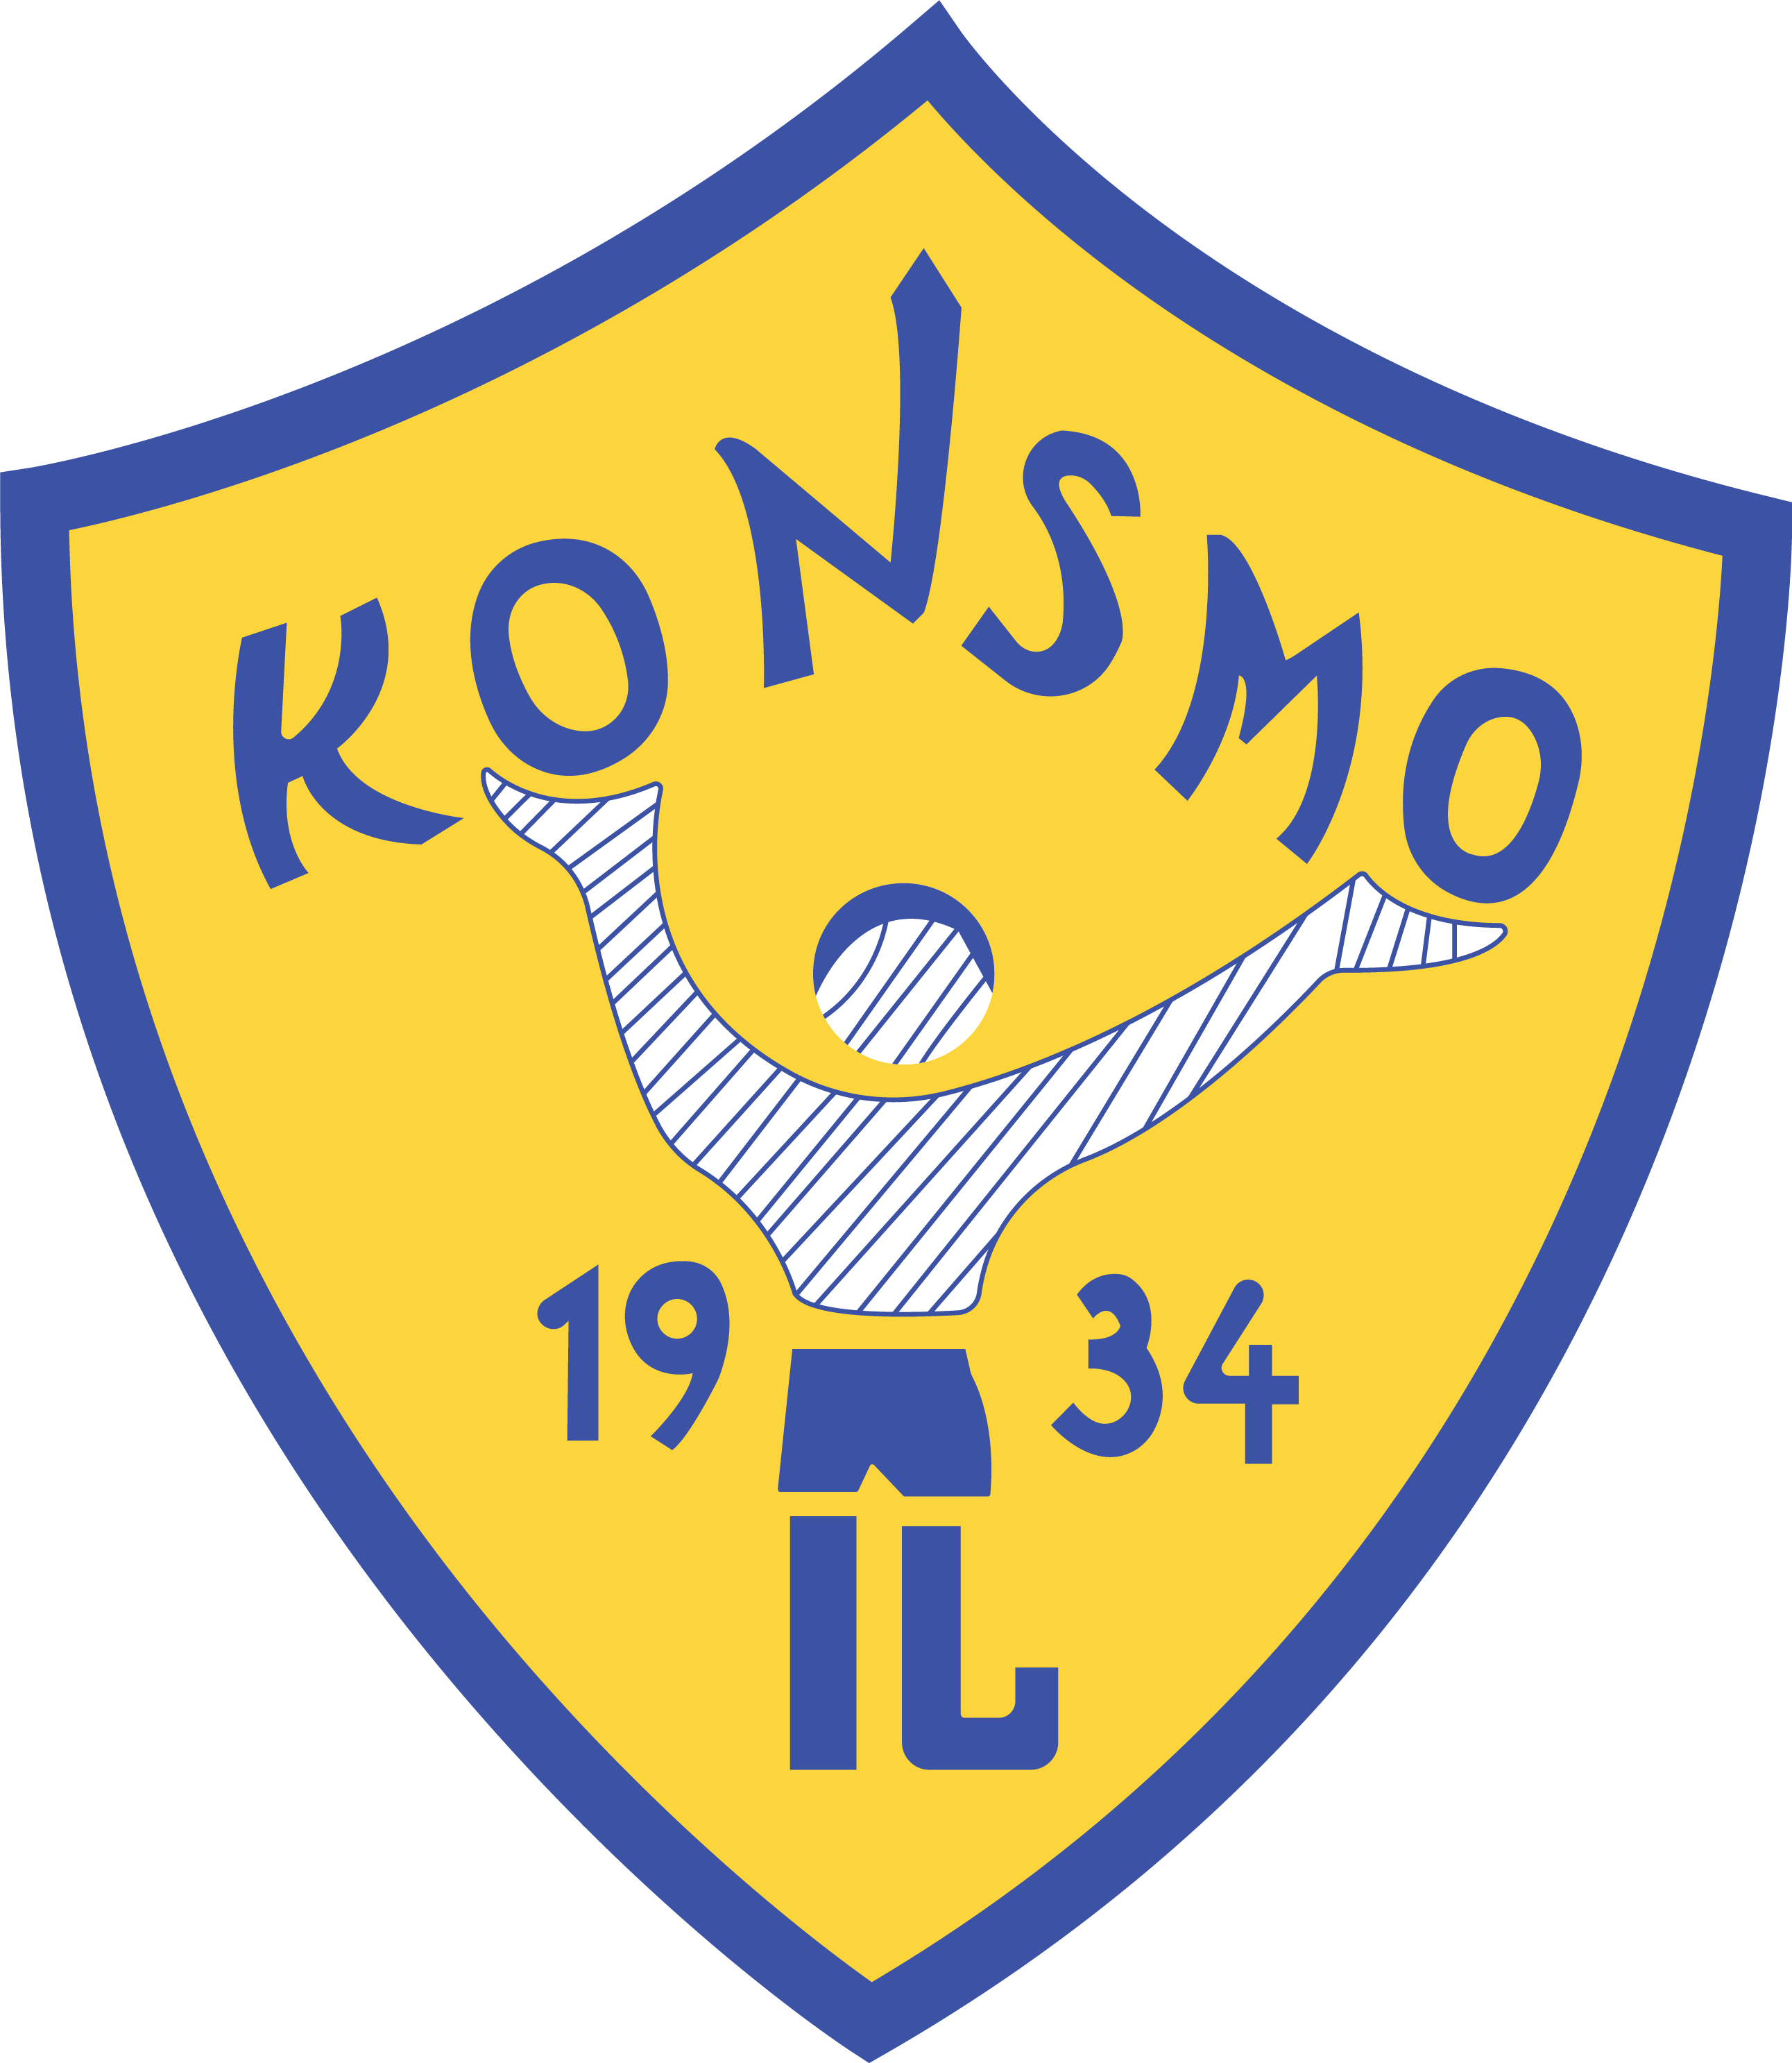 Konsmo_IL_-_logo2 deliver